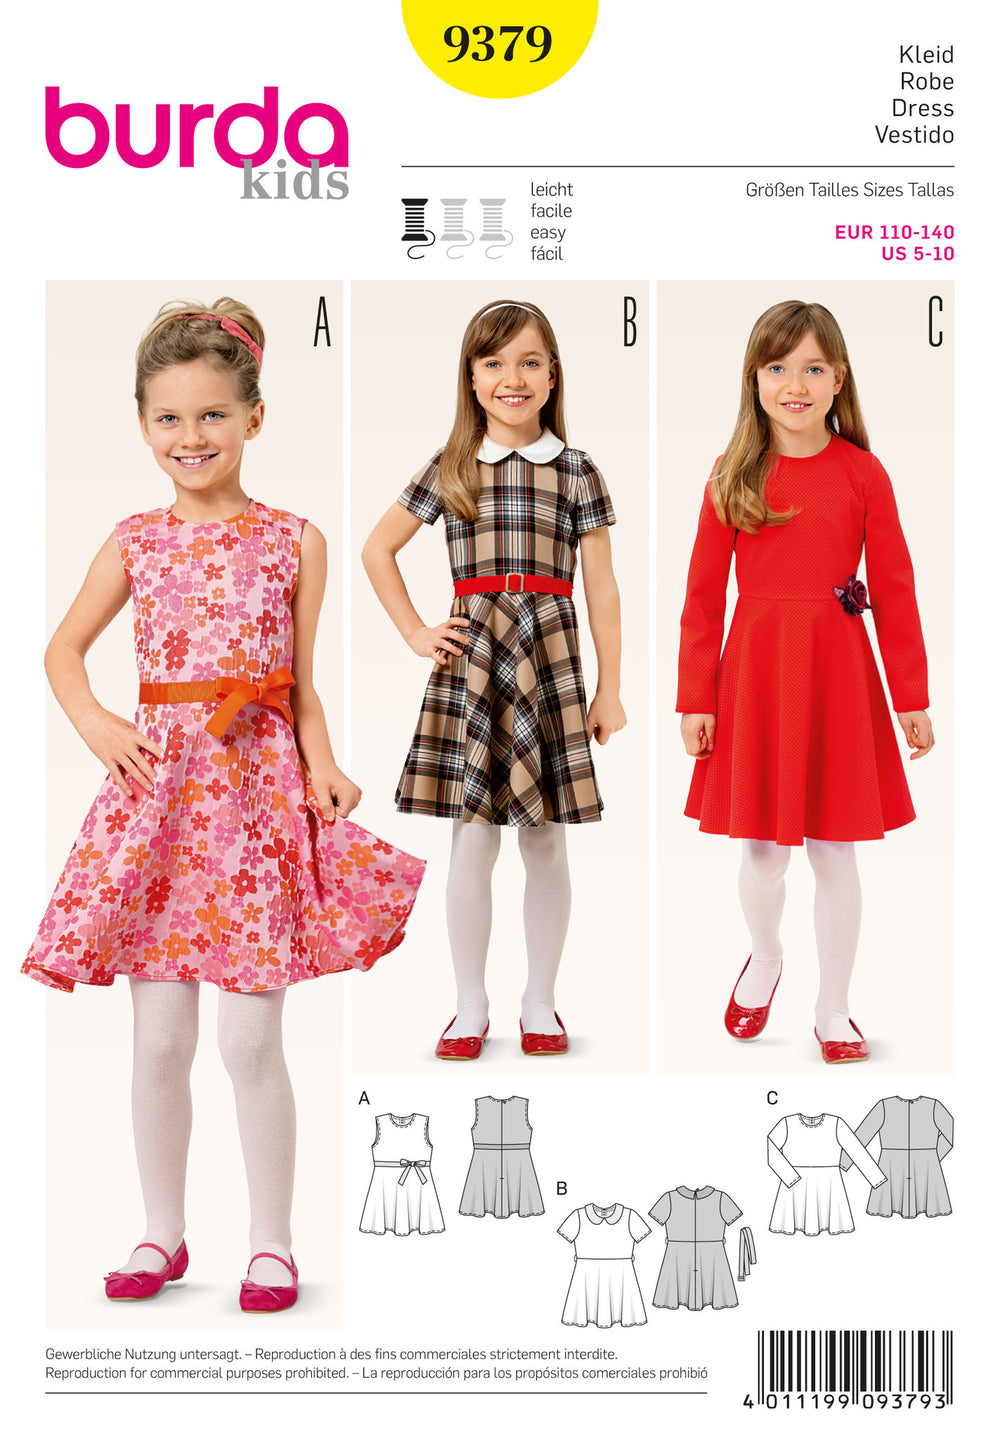 BD9379 Burda Style Pattern 9379 Dress from Jaycotts Sewing Supplies